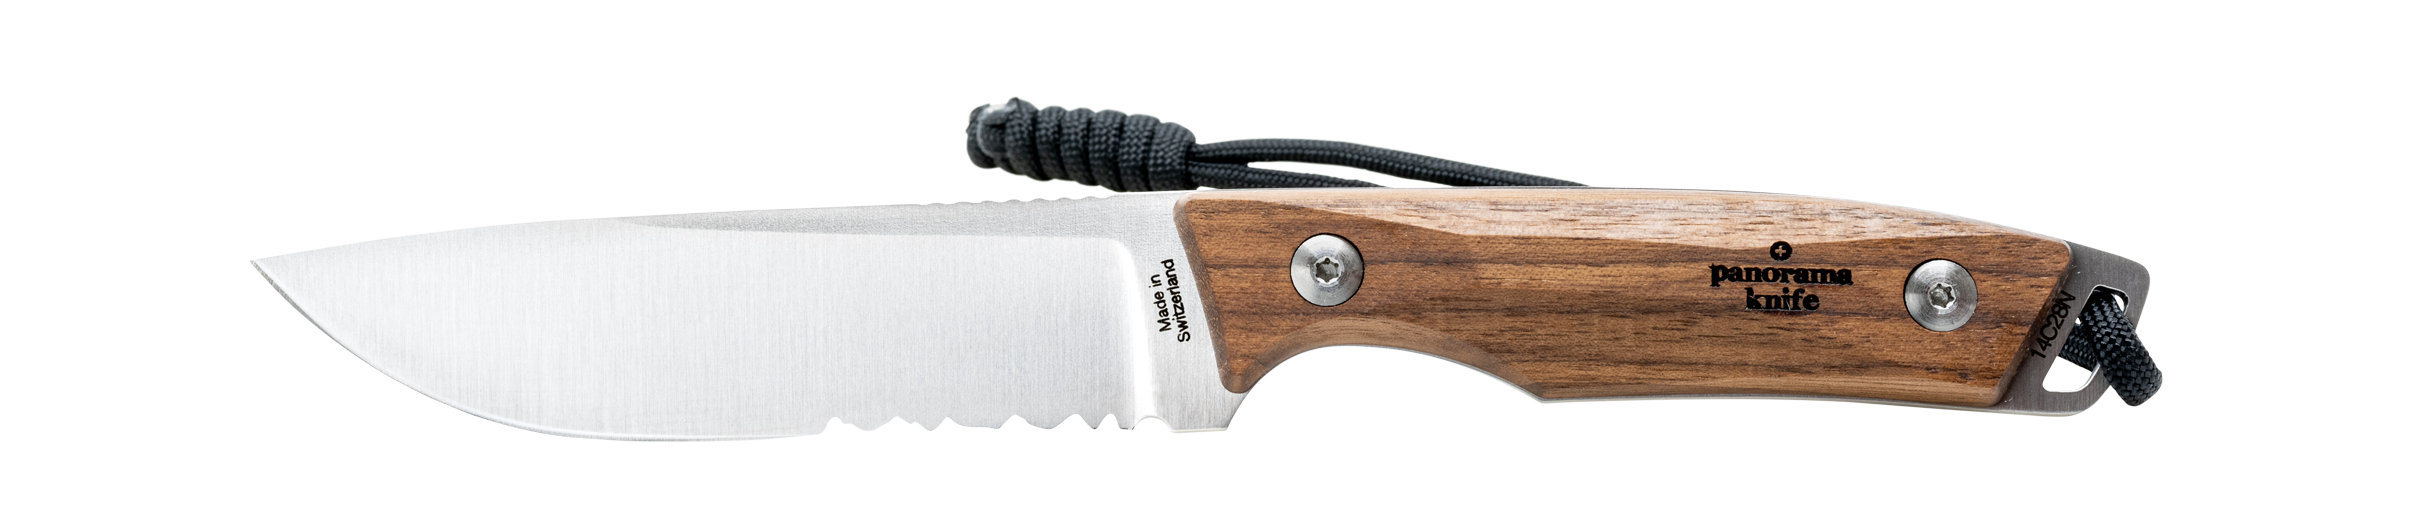 Panorama Bushcraft Knife